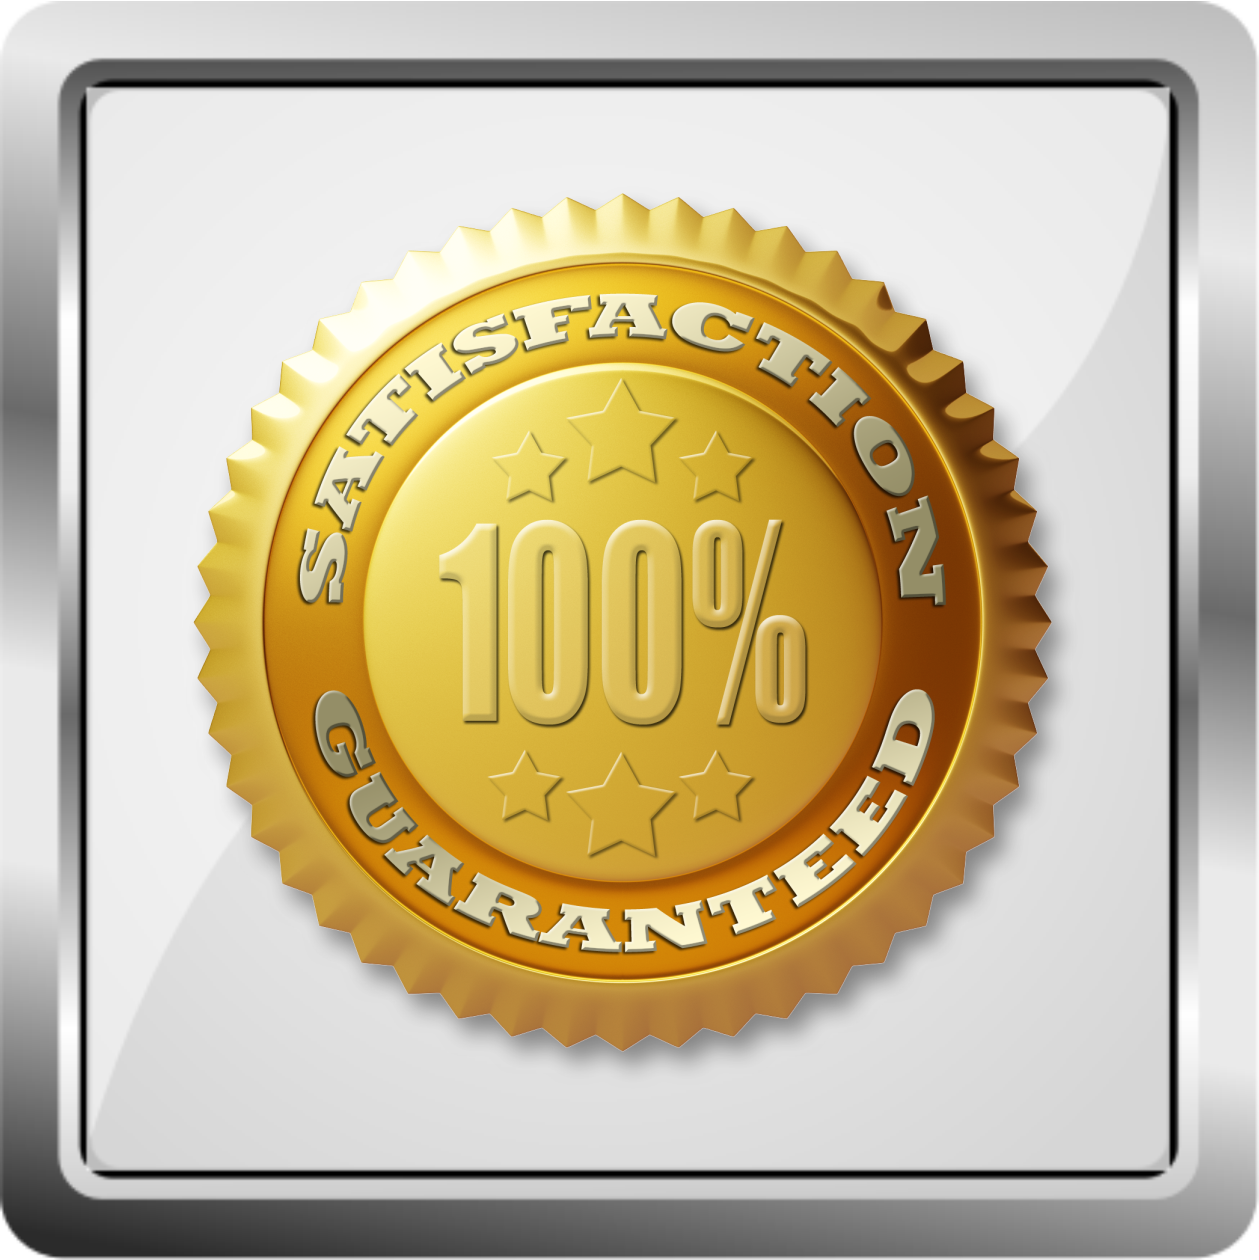 100% Satisfaction - Customer service